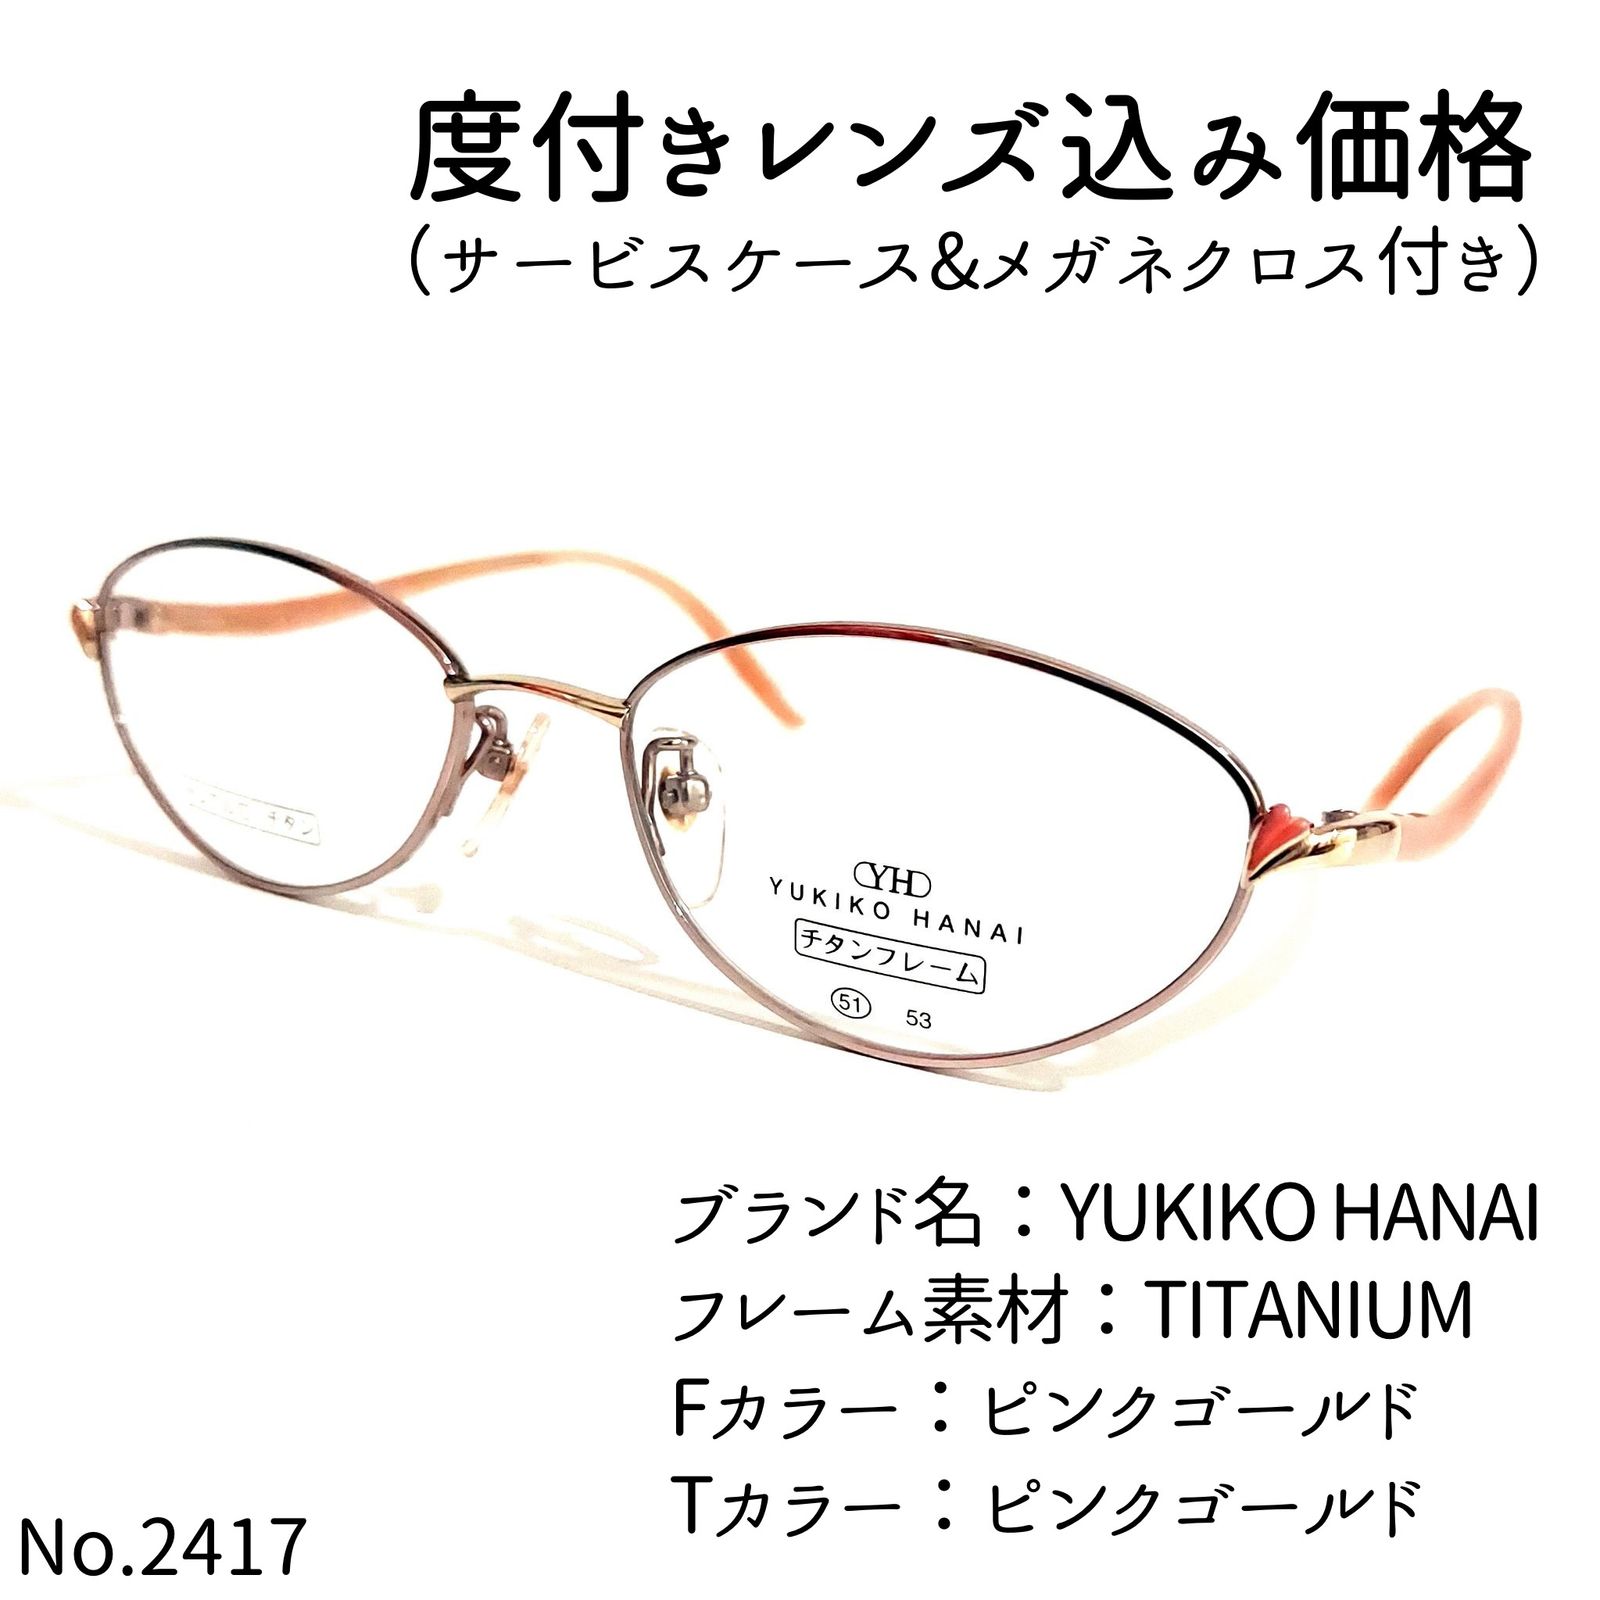 No.2417メガネ YUKIKO HANAI【度数入り込み価格】 www.krzysztofbialy.com